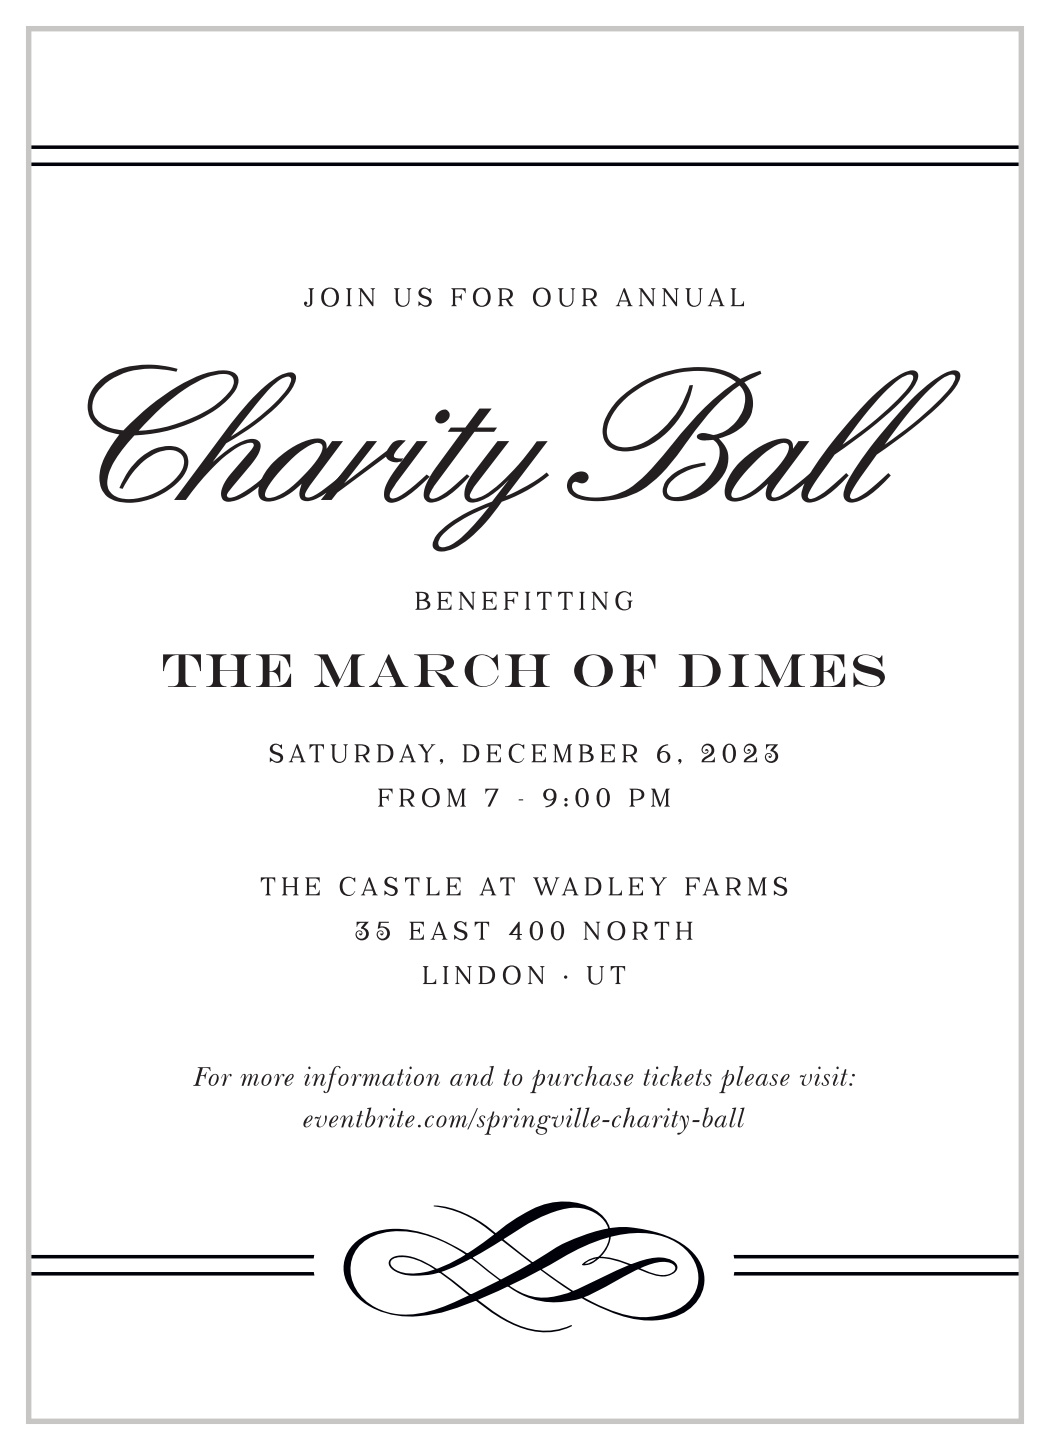 Classic Charity Ball Gala Invitations